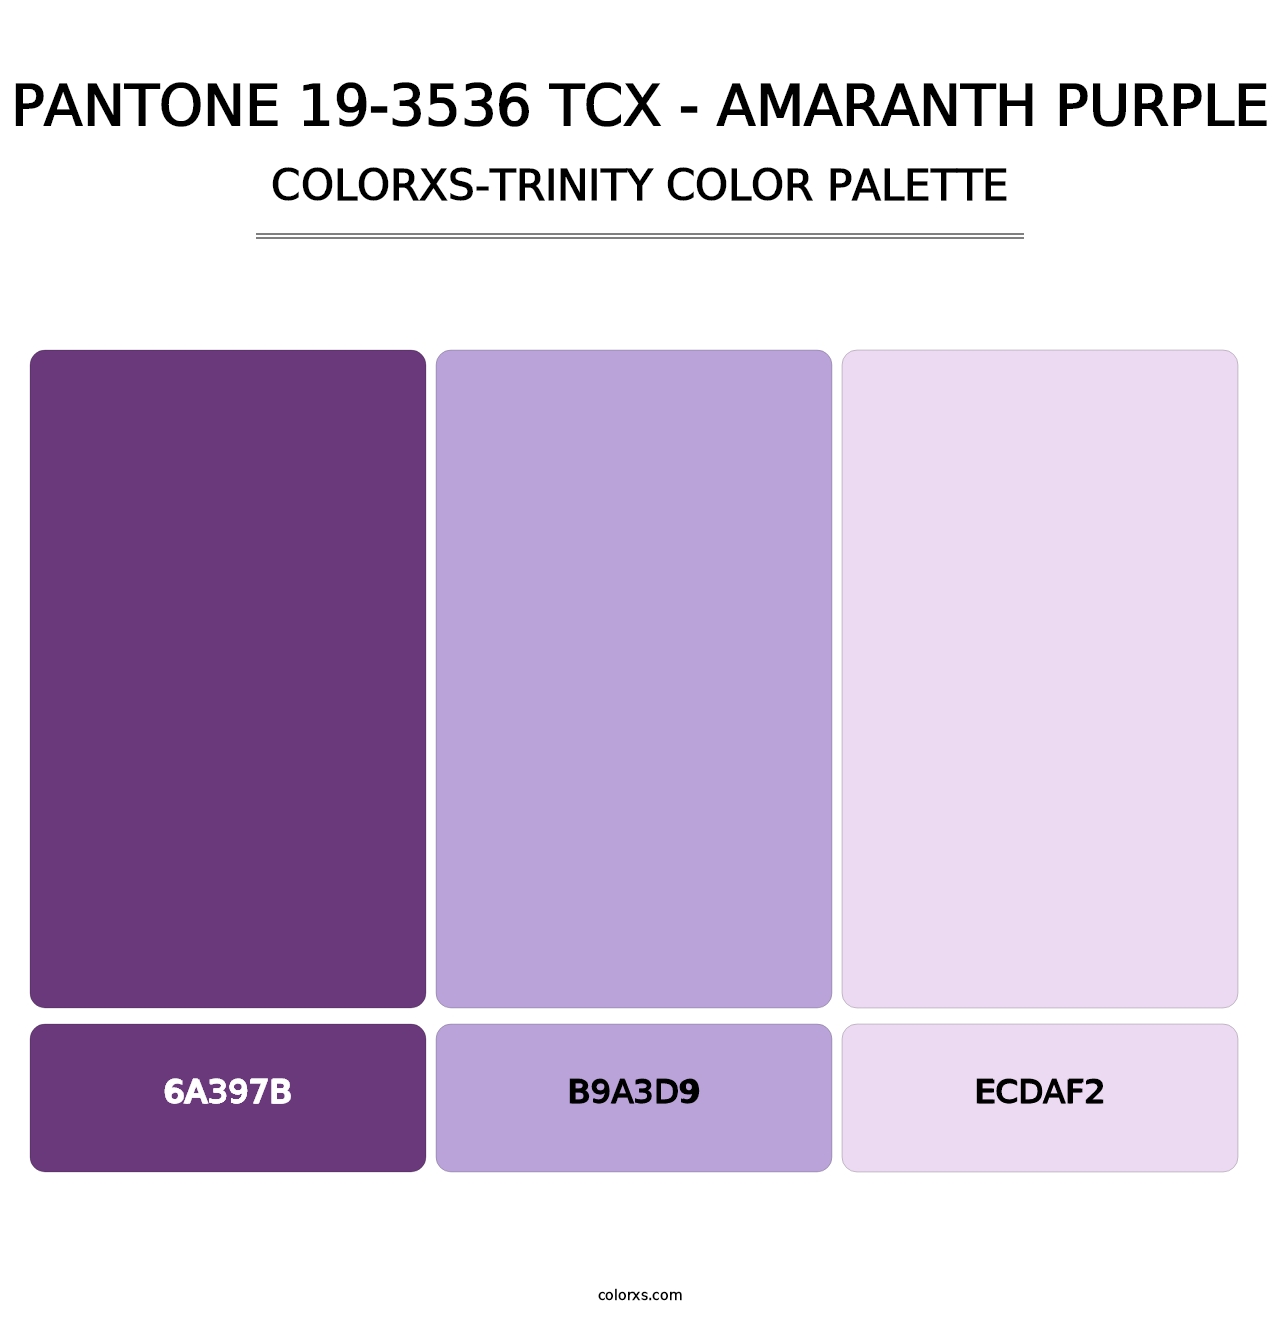 PANTONE 19-3536 TCX - Amaranth Purple - Colorxs Trinity Palette